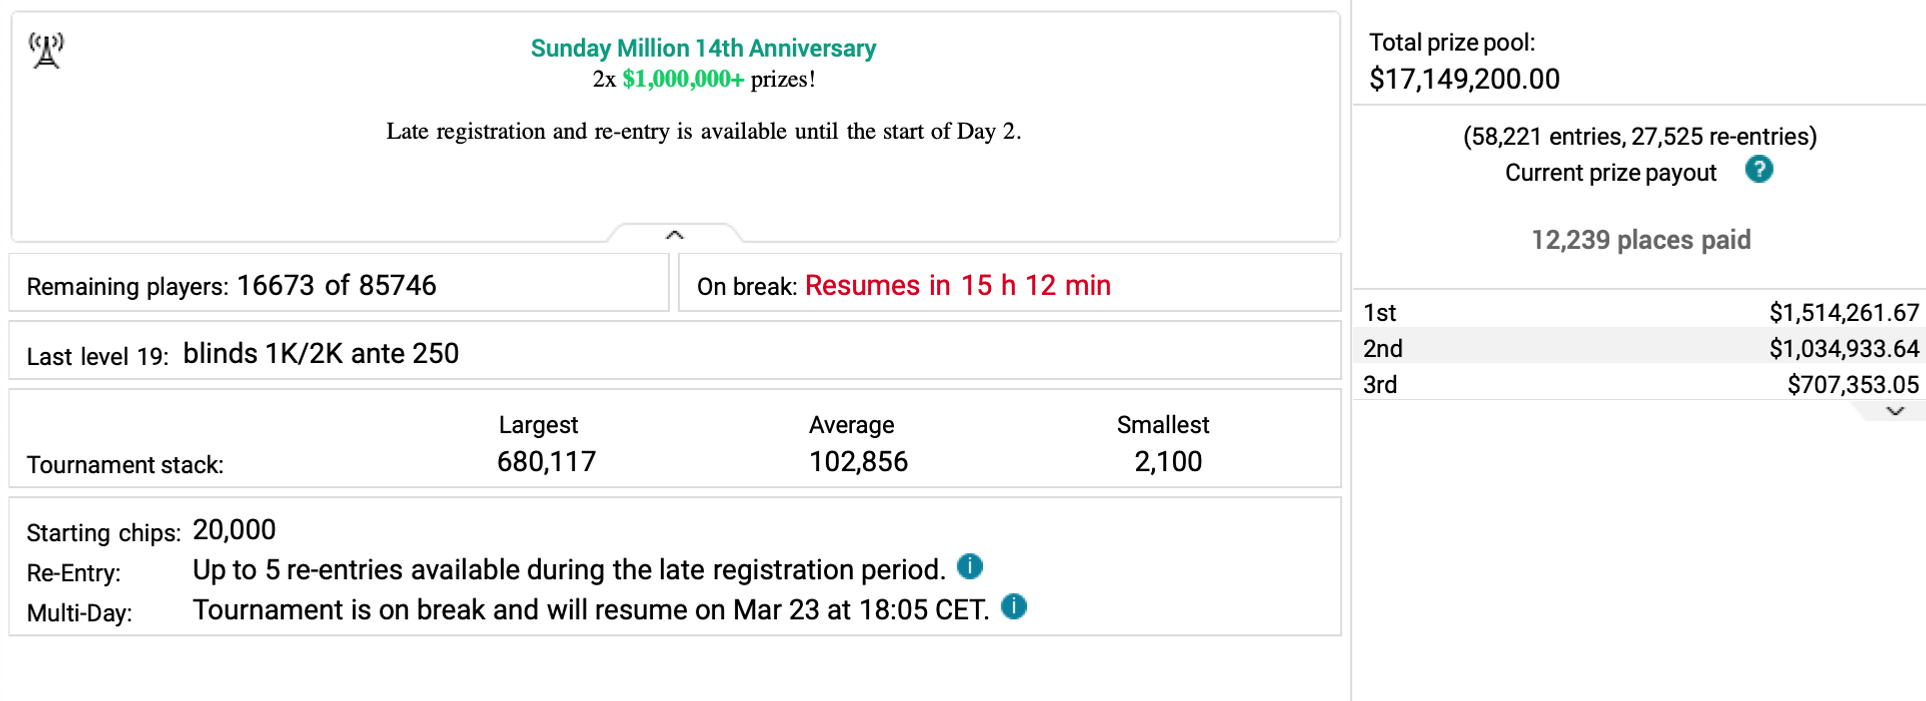 Screen shot of sunday million anniversary prize pool